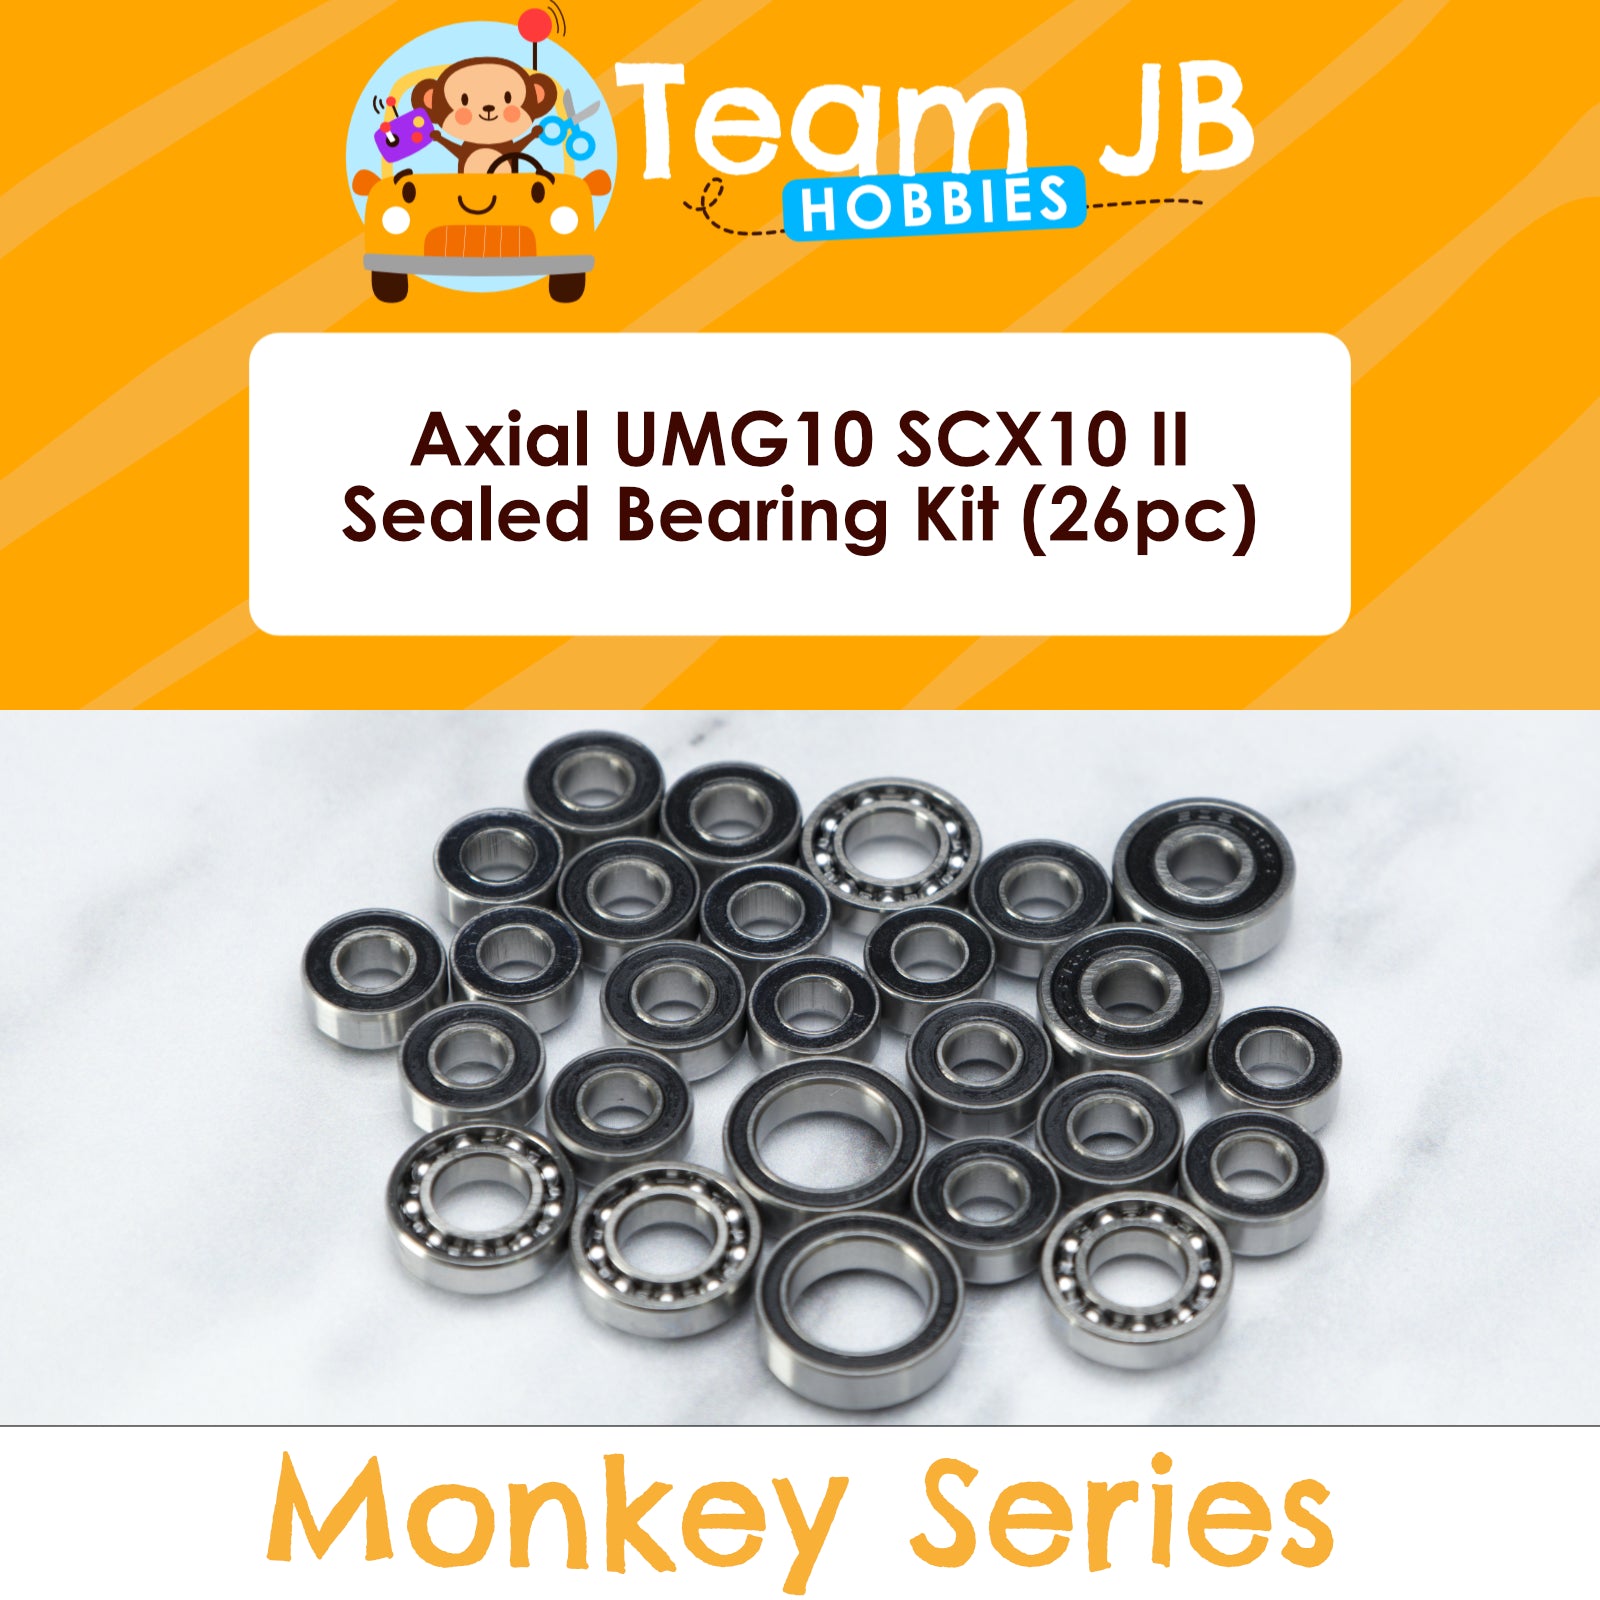 Axial UMG10 SCX10 II - Sealed Bearing Kit